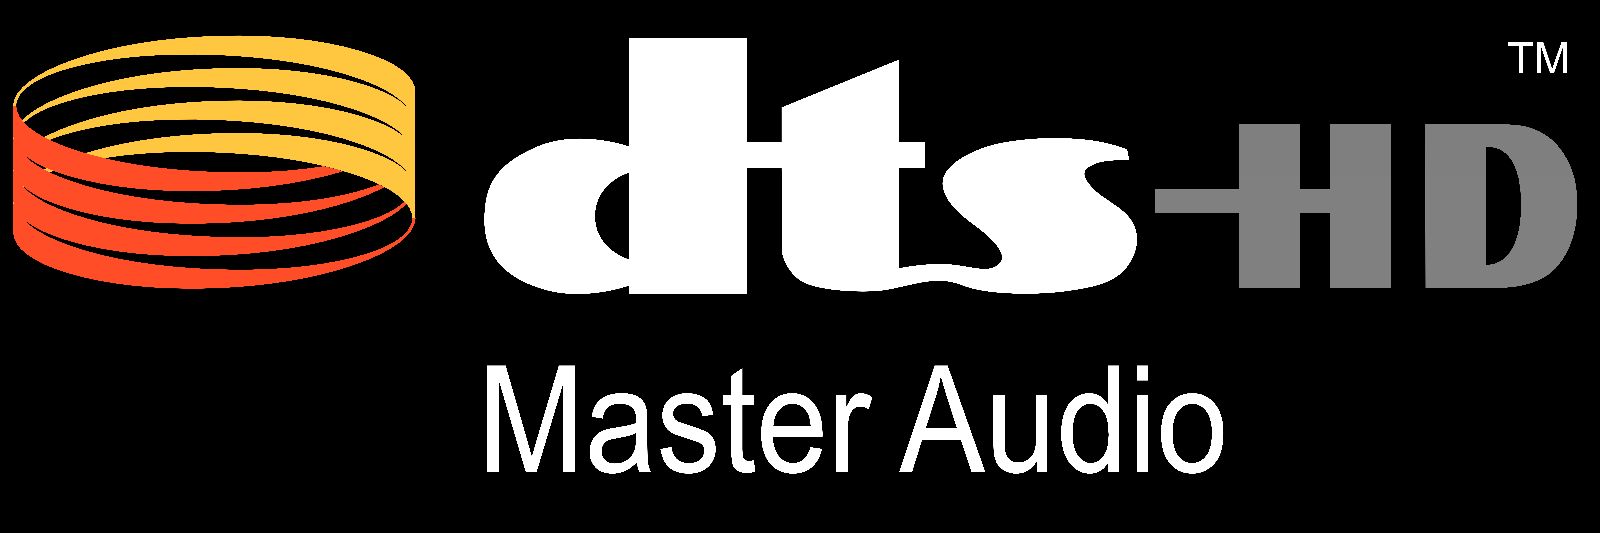 dts x master audio